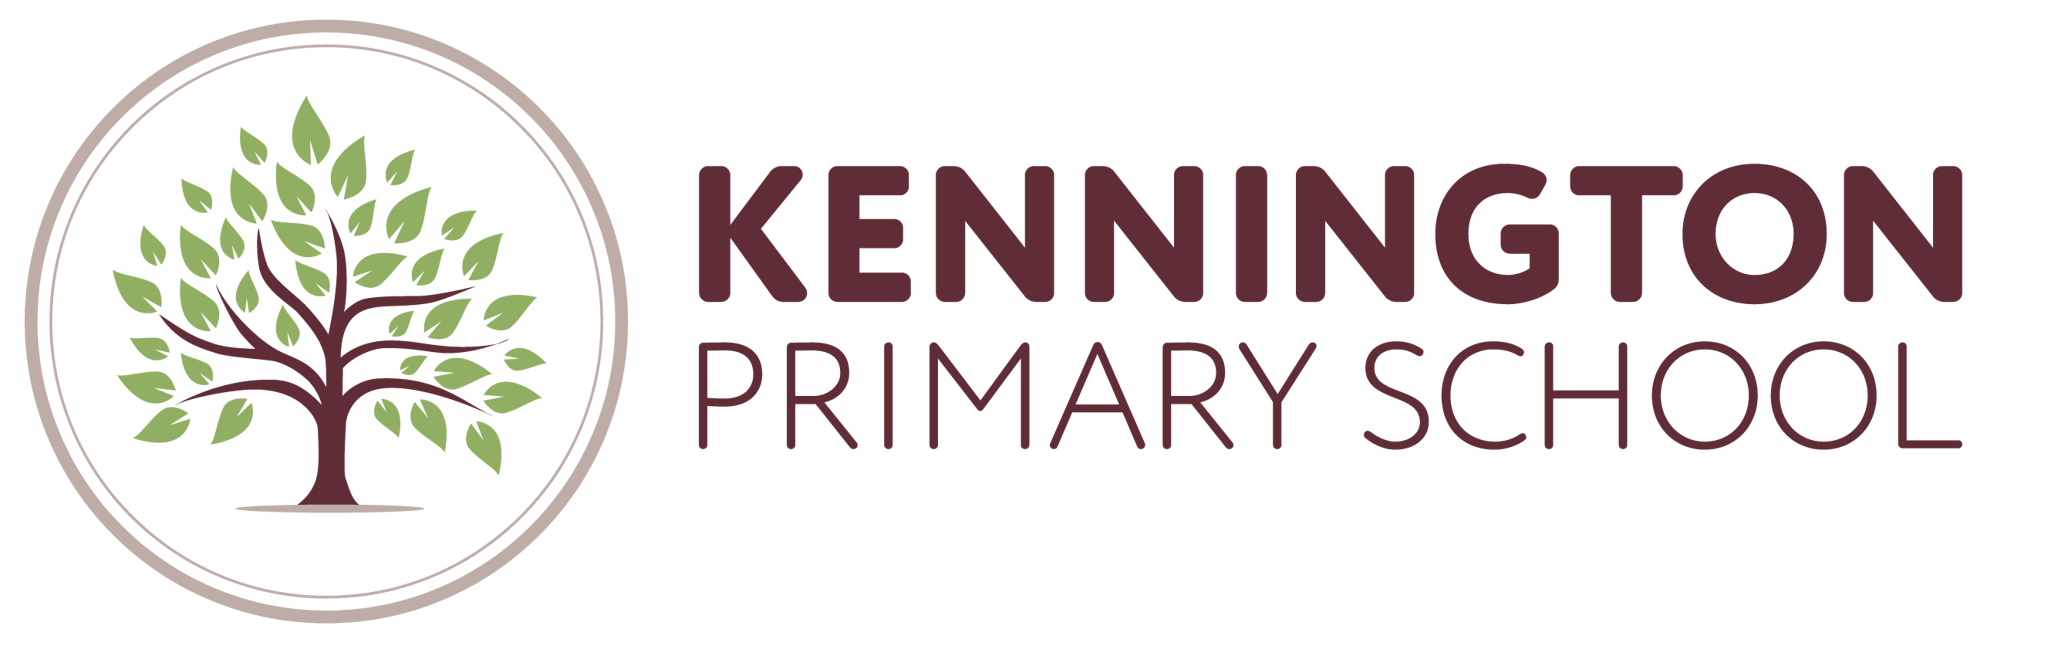 Kennington Primary School